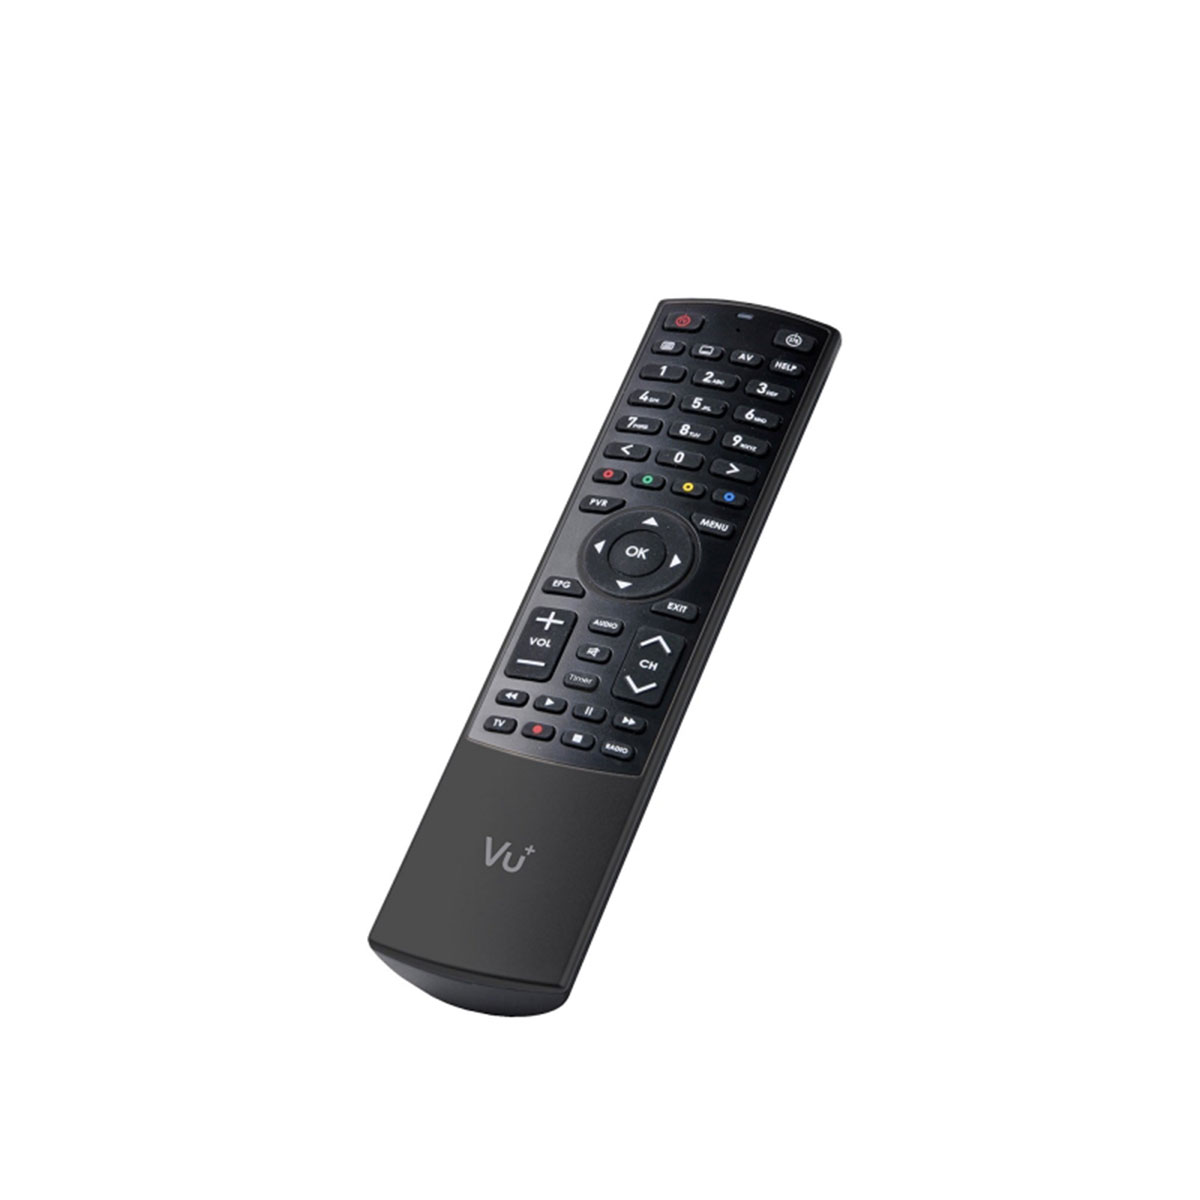 VU+ Zero 4K Sat-Receiver (HDTV, DVB-S2, DVB-S, schwarz) PVR-Funktion=optional